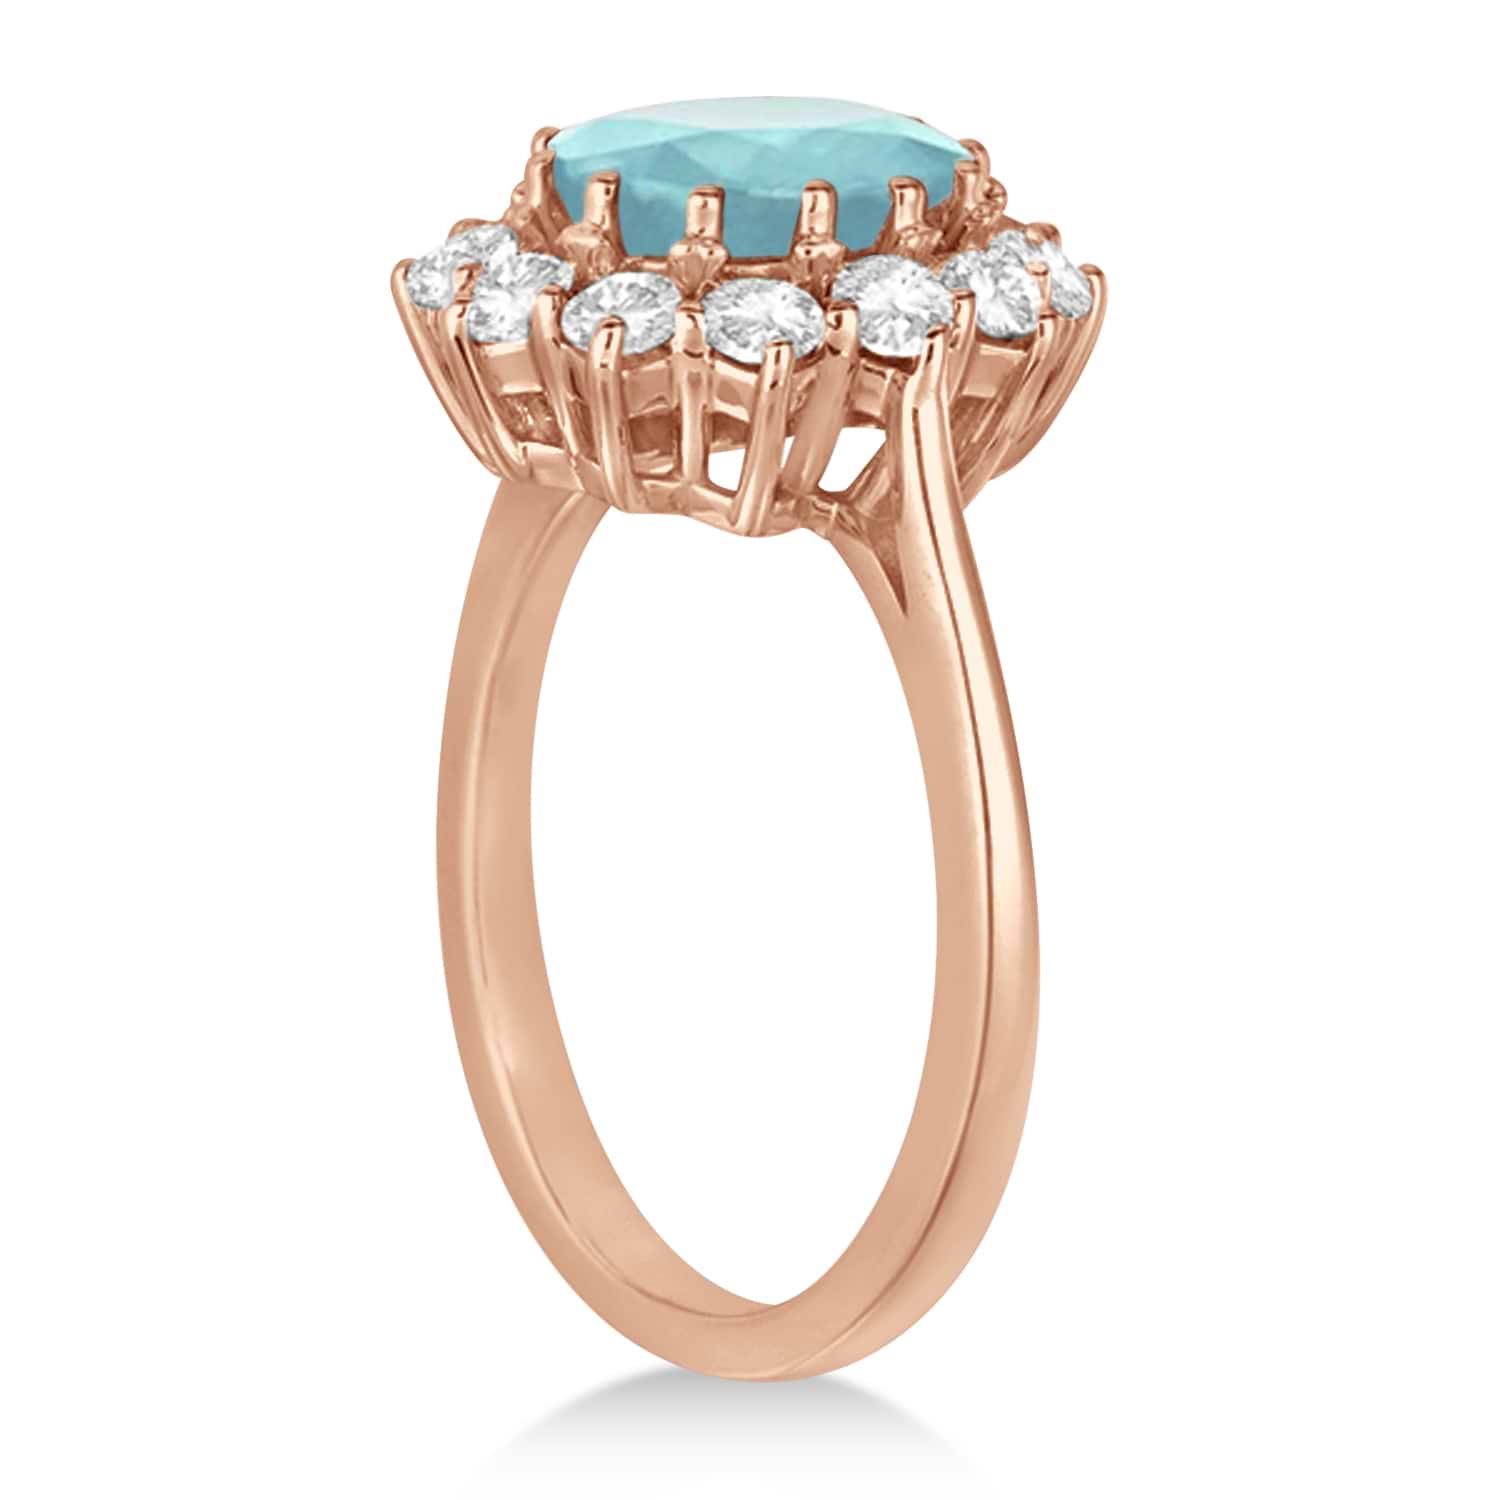 Oval Aquamarine and Diamond Ring 18k Rose Gold (3.60ctw)